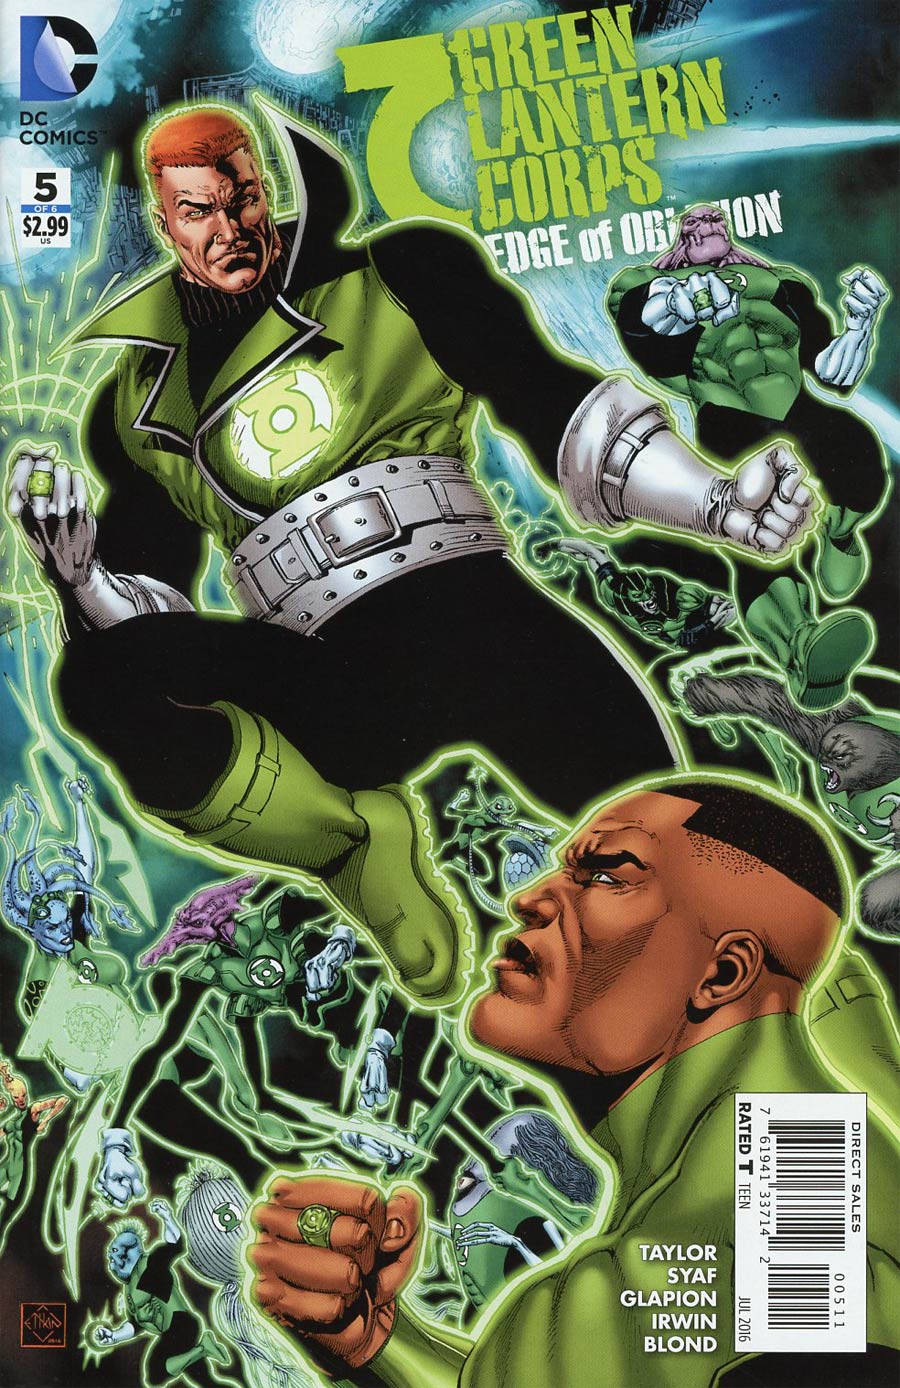 Green Lantern Corps Edge Of Oblivion #5